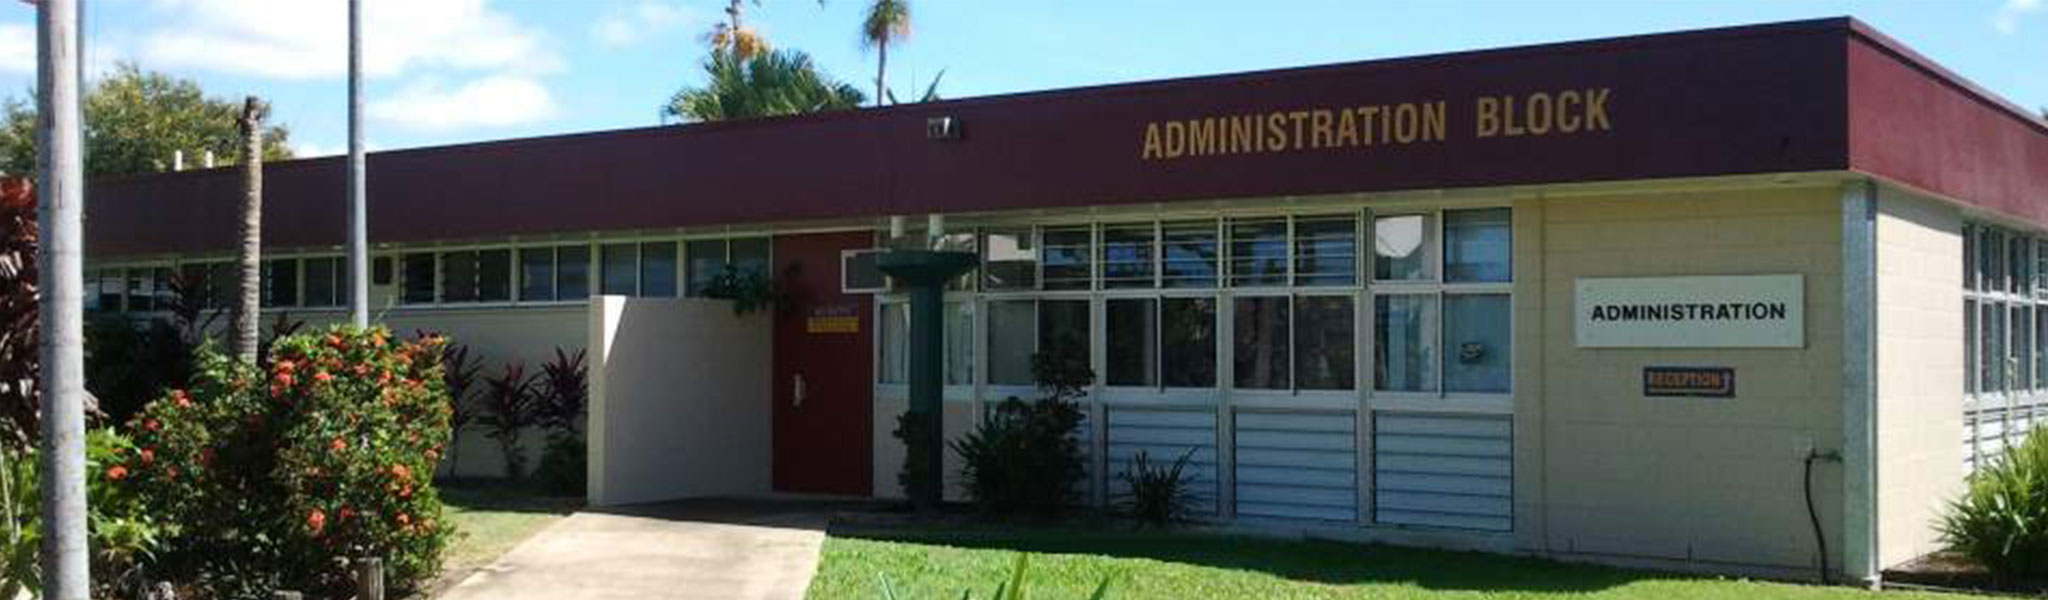 School administration building